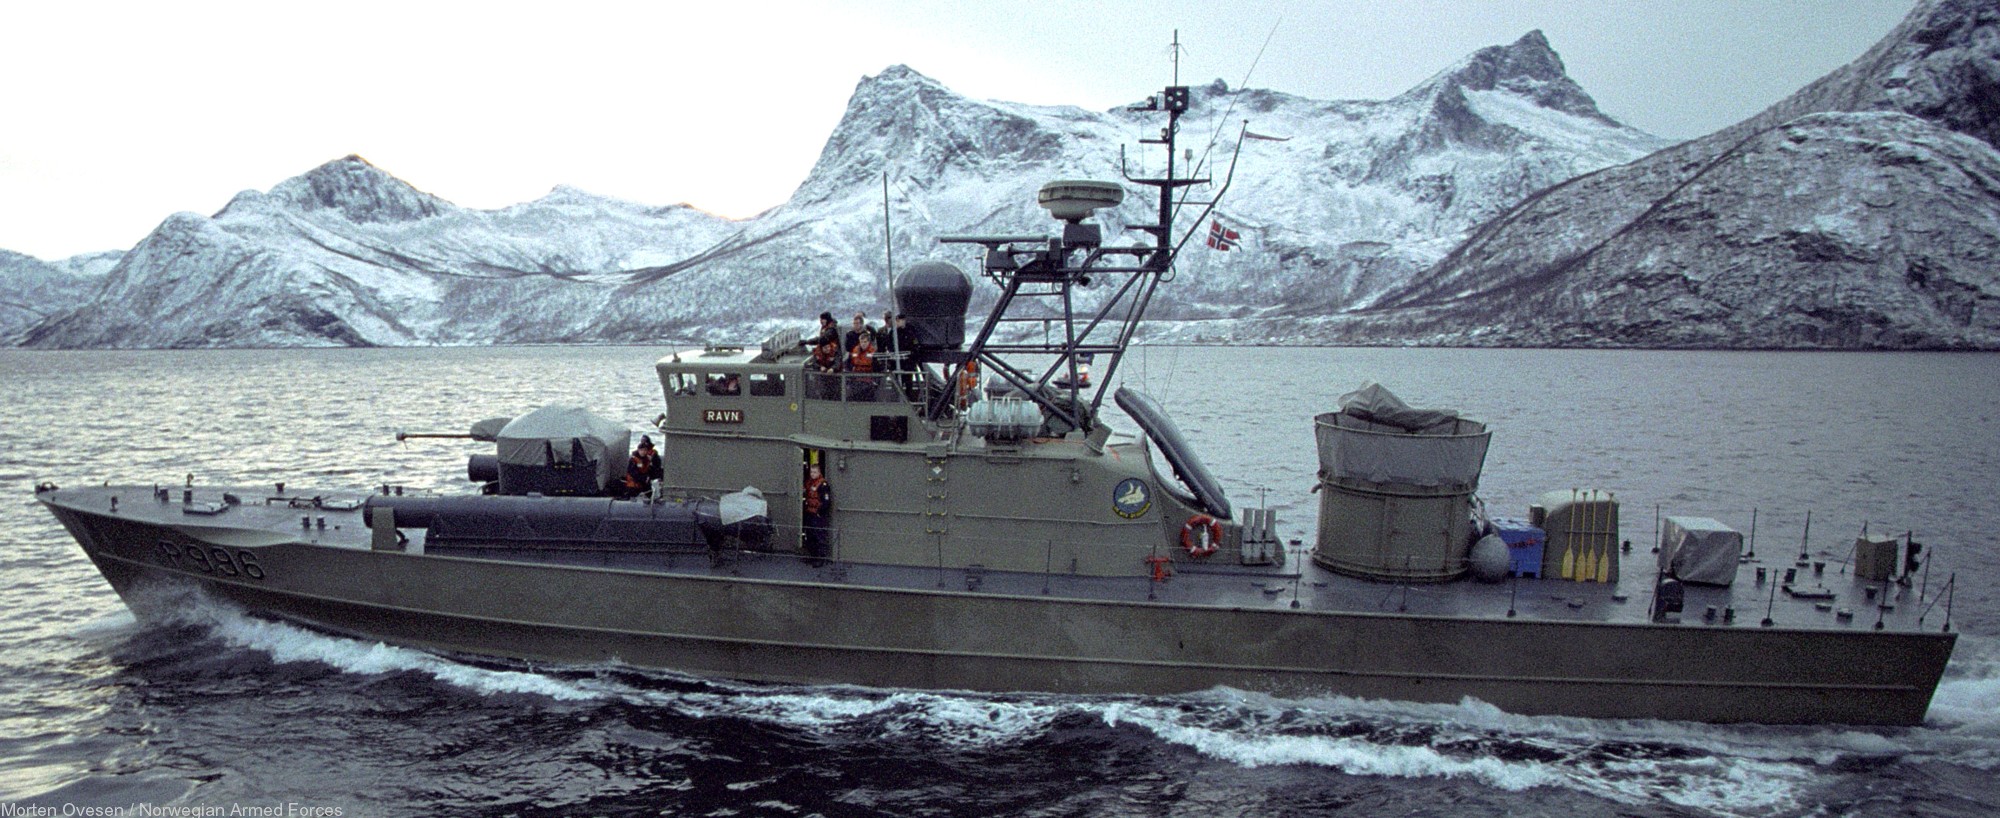 p-996 knm ravn hauk class fast attack missile torpedo craft boat norwegian navy sjøforsvaret 04